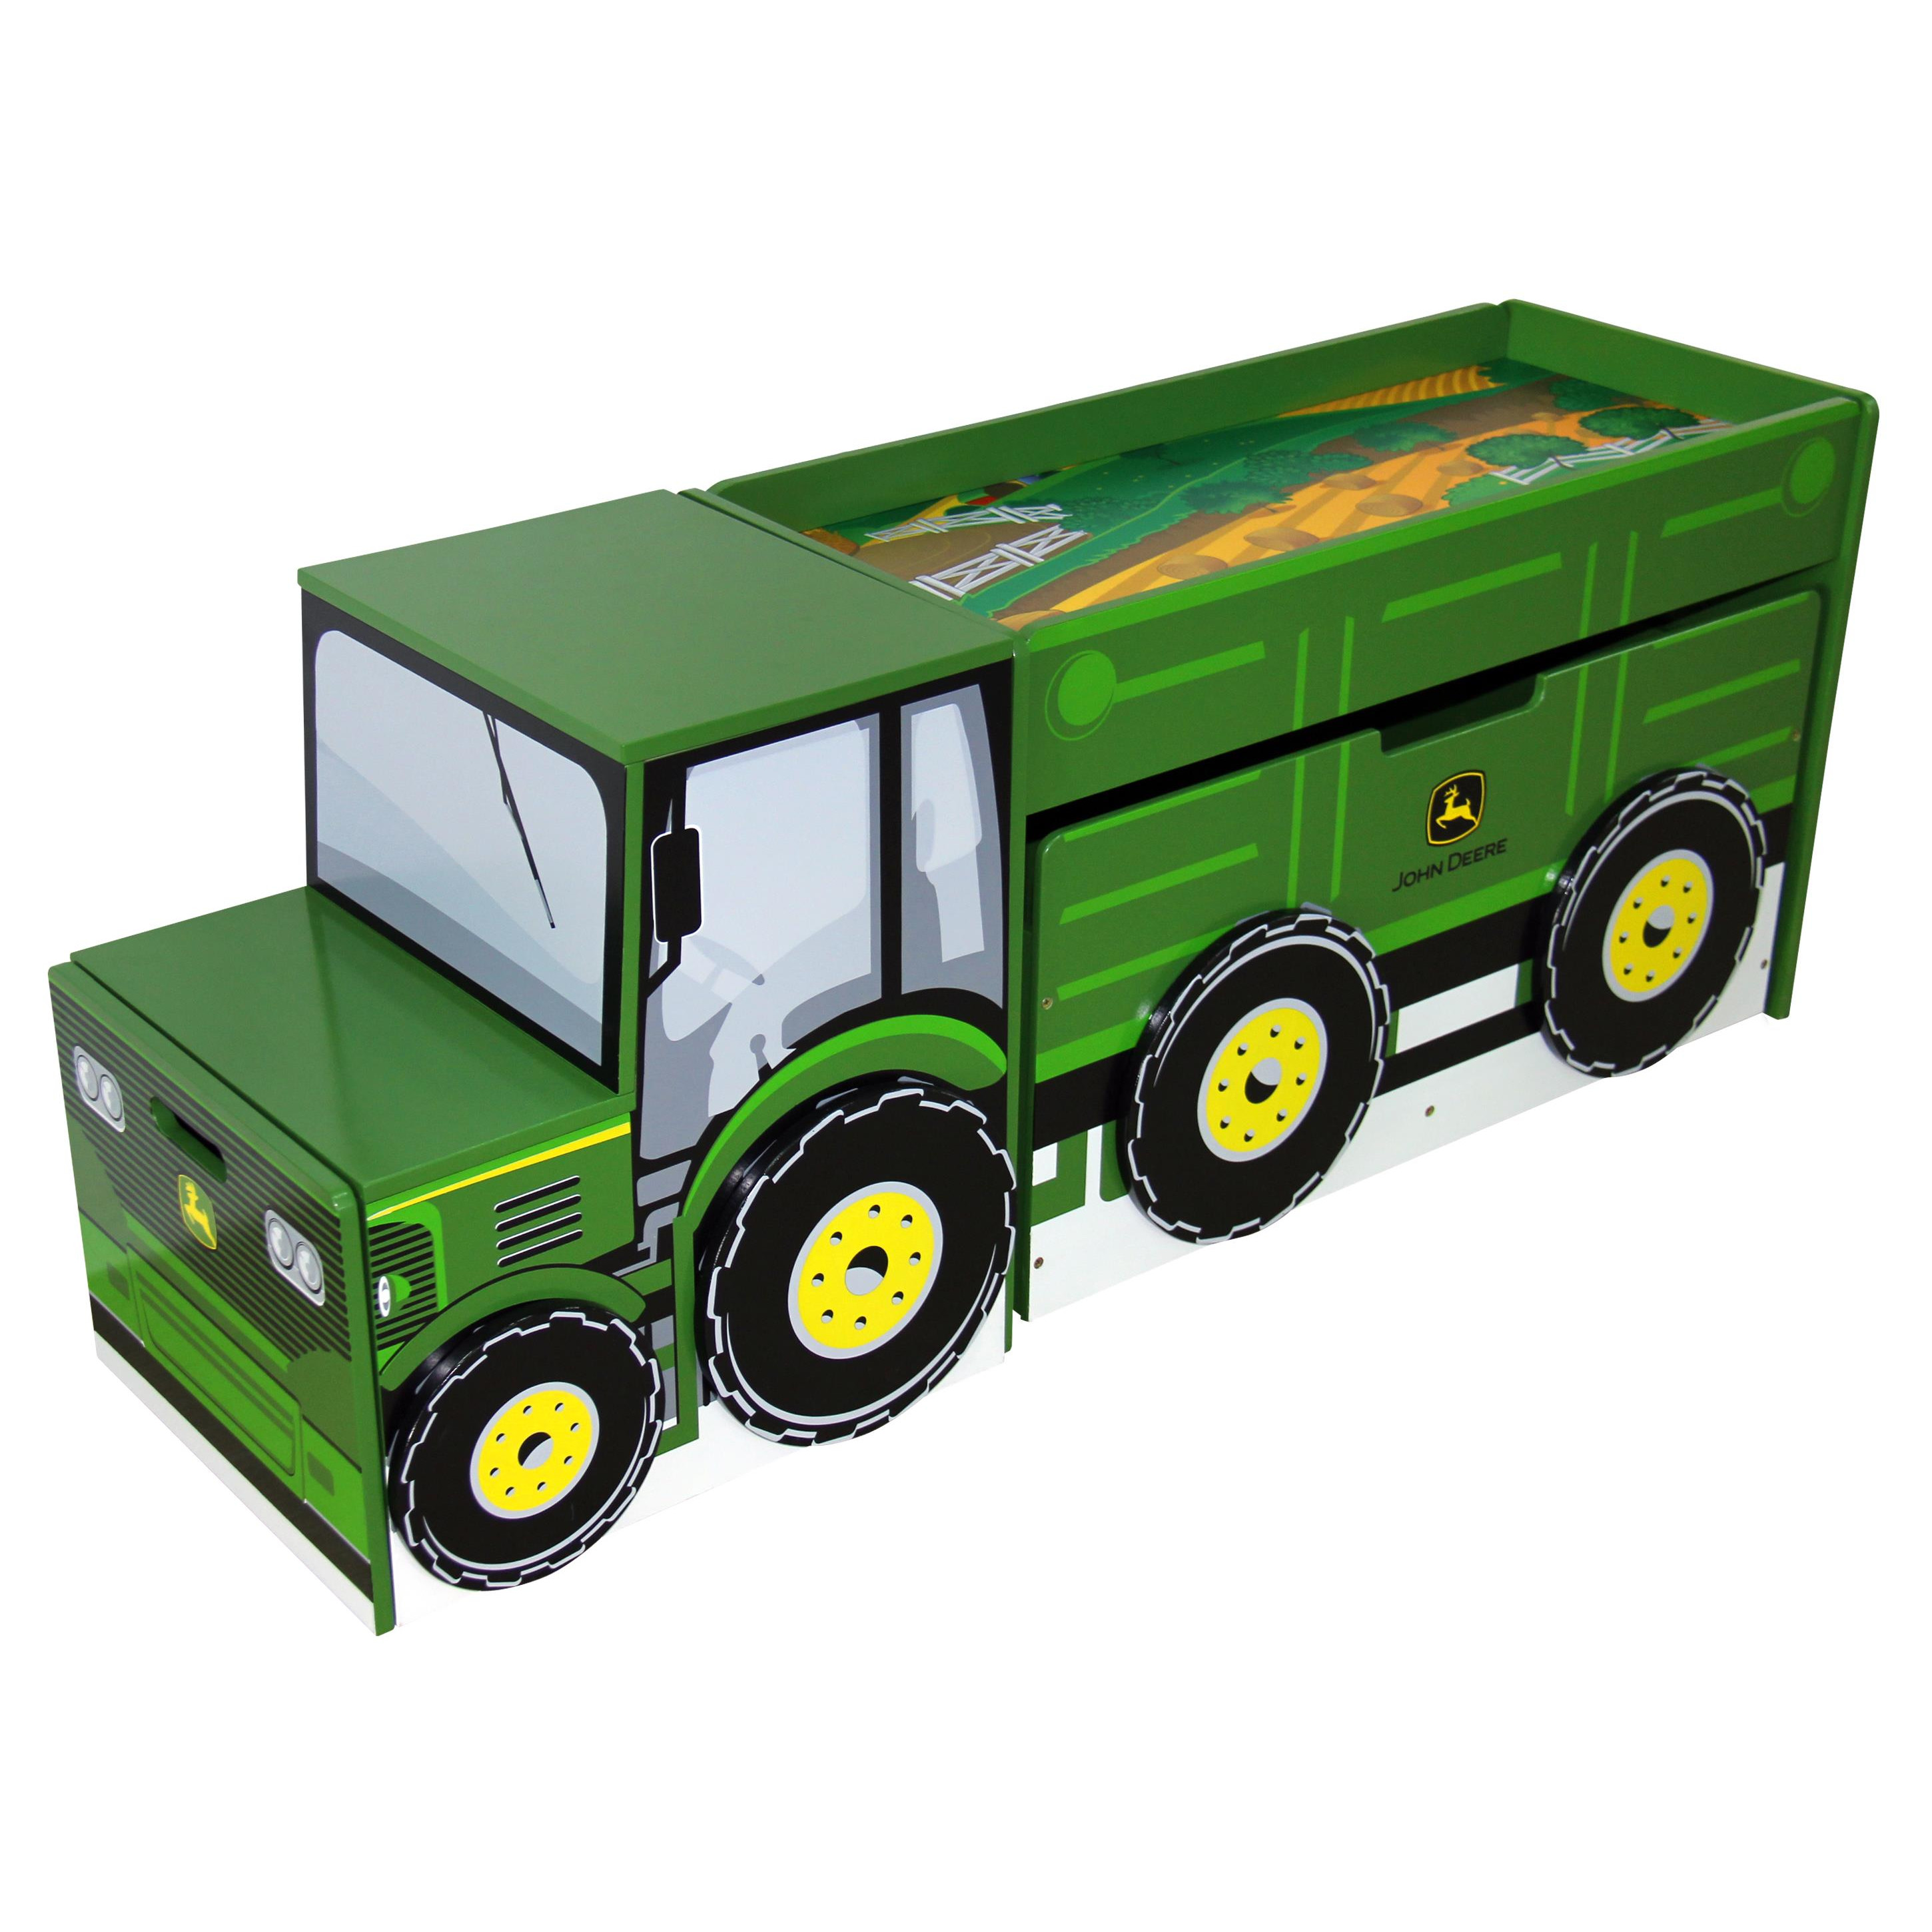 John Deere Tractor Toy box Set & Reviews | Wayfair